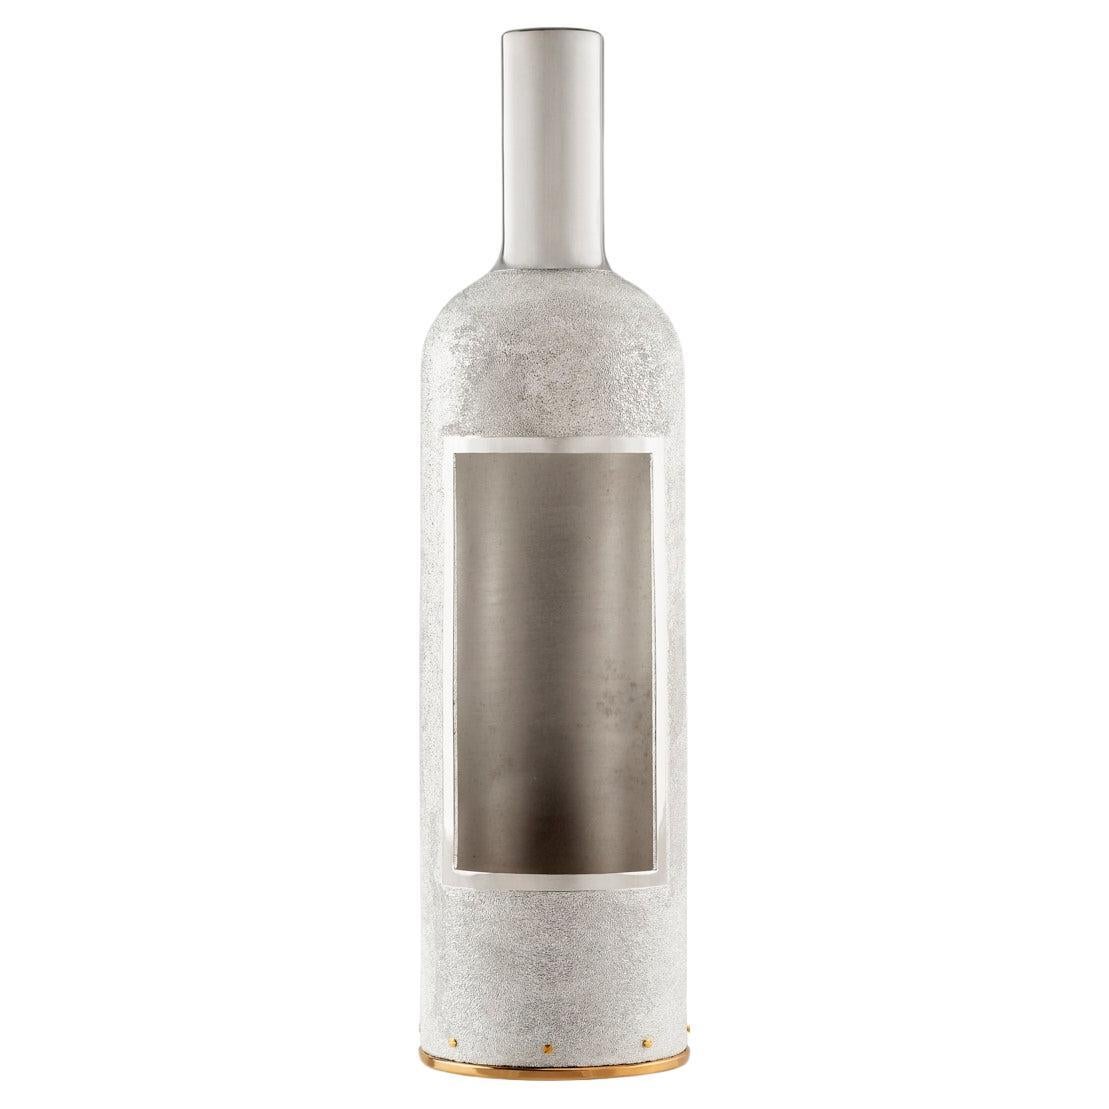 K-OVER wine, MOONLIGHT WITH WINDOW, argento 999/°°, Italia For Sale